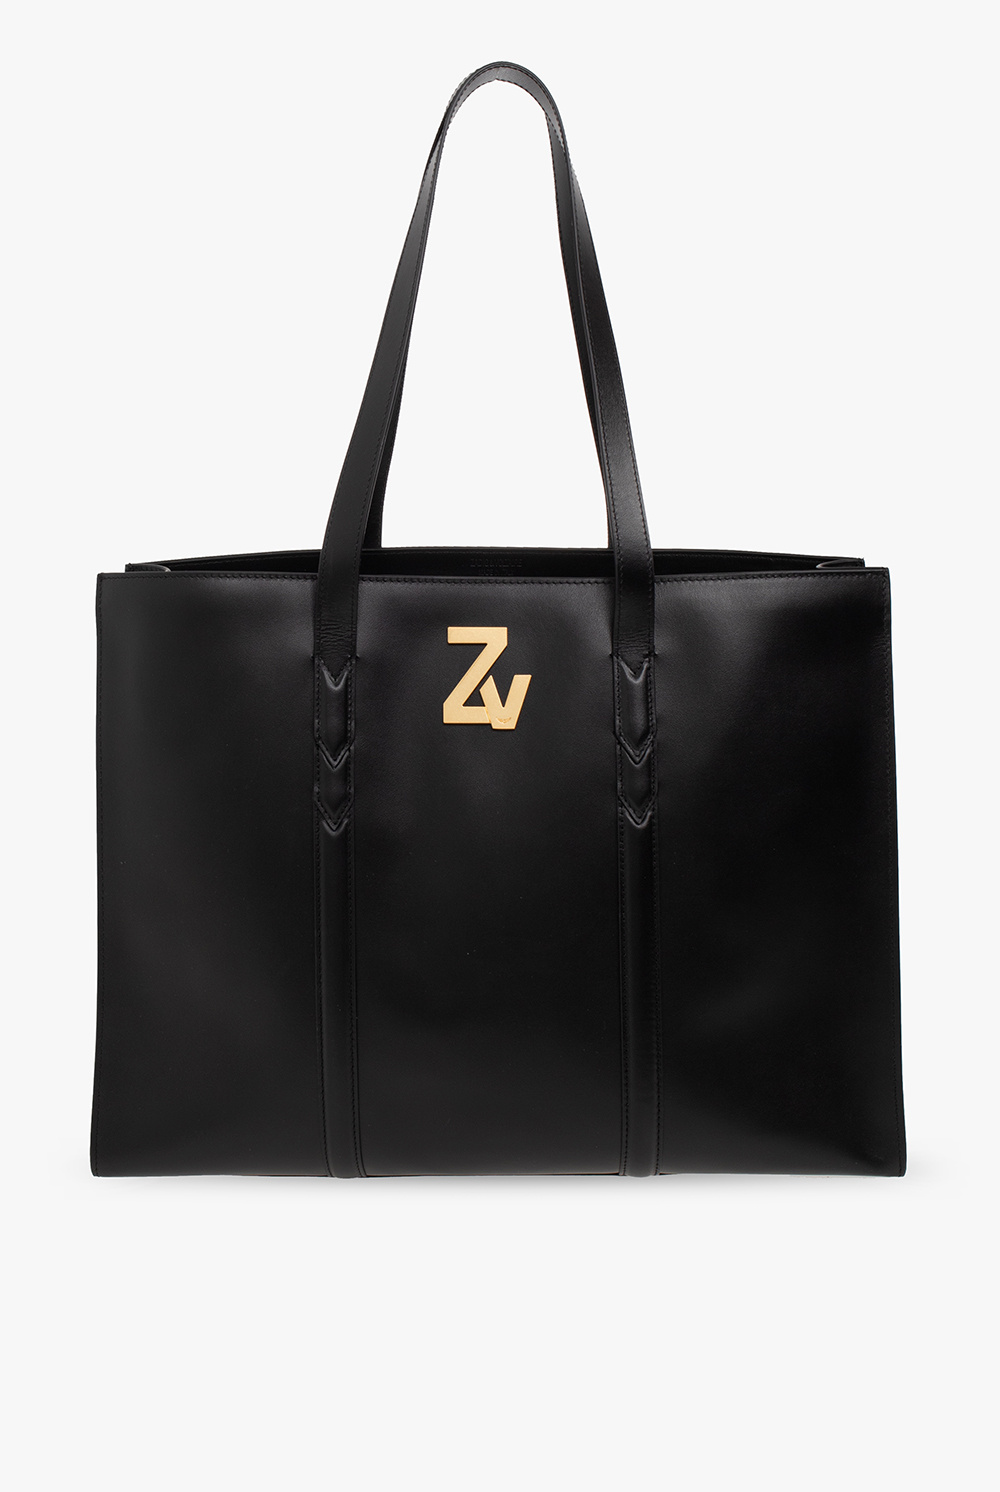 Zadig & Voltaire ‘Le Tote’ shopper bag